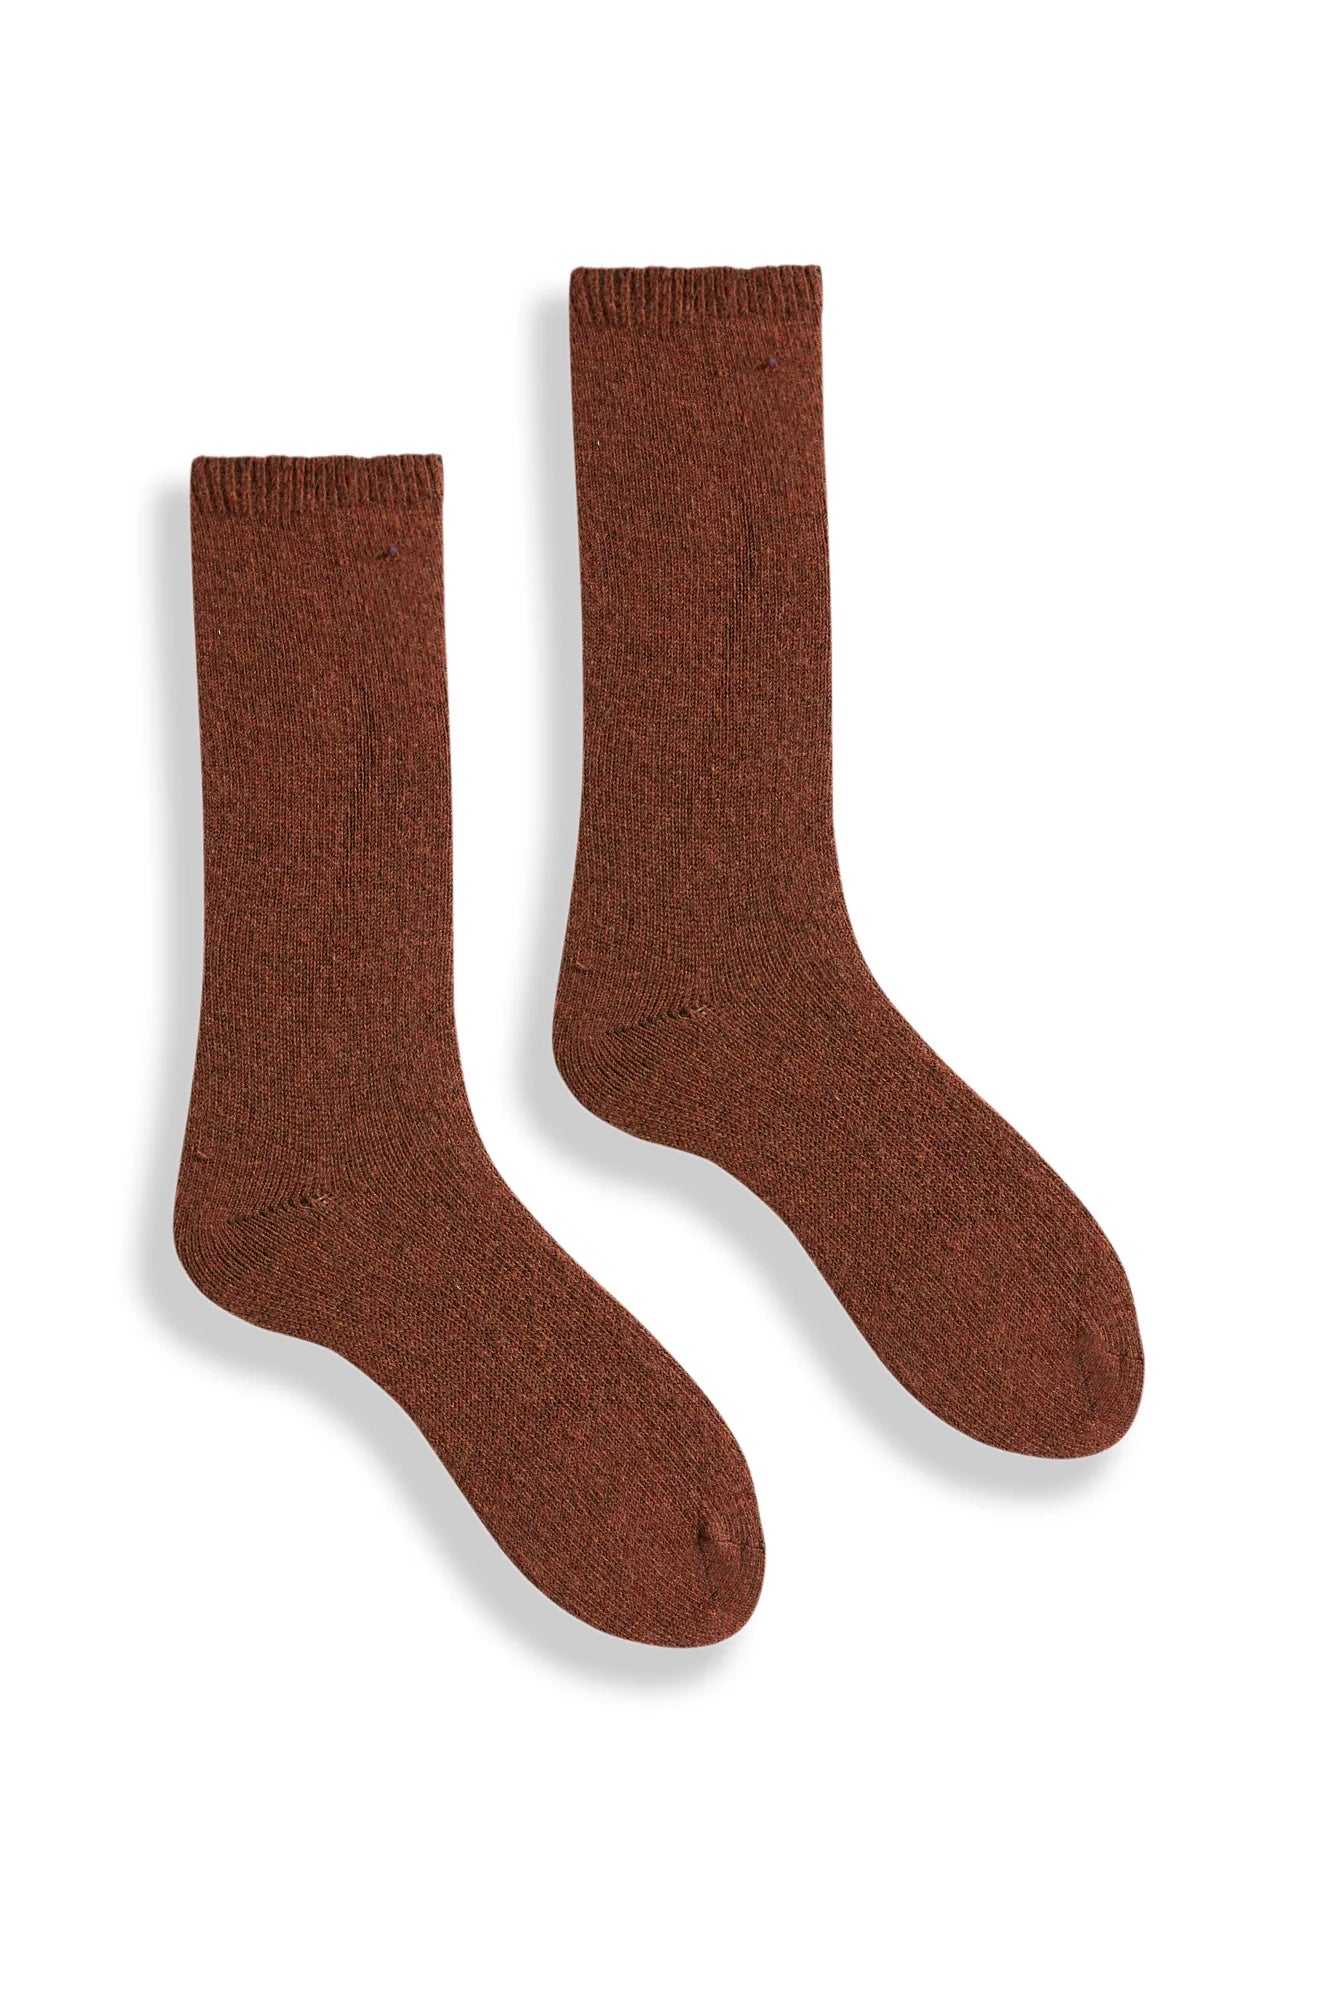 lisa b. / solid wool cashmere crew socks